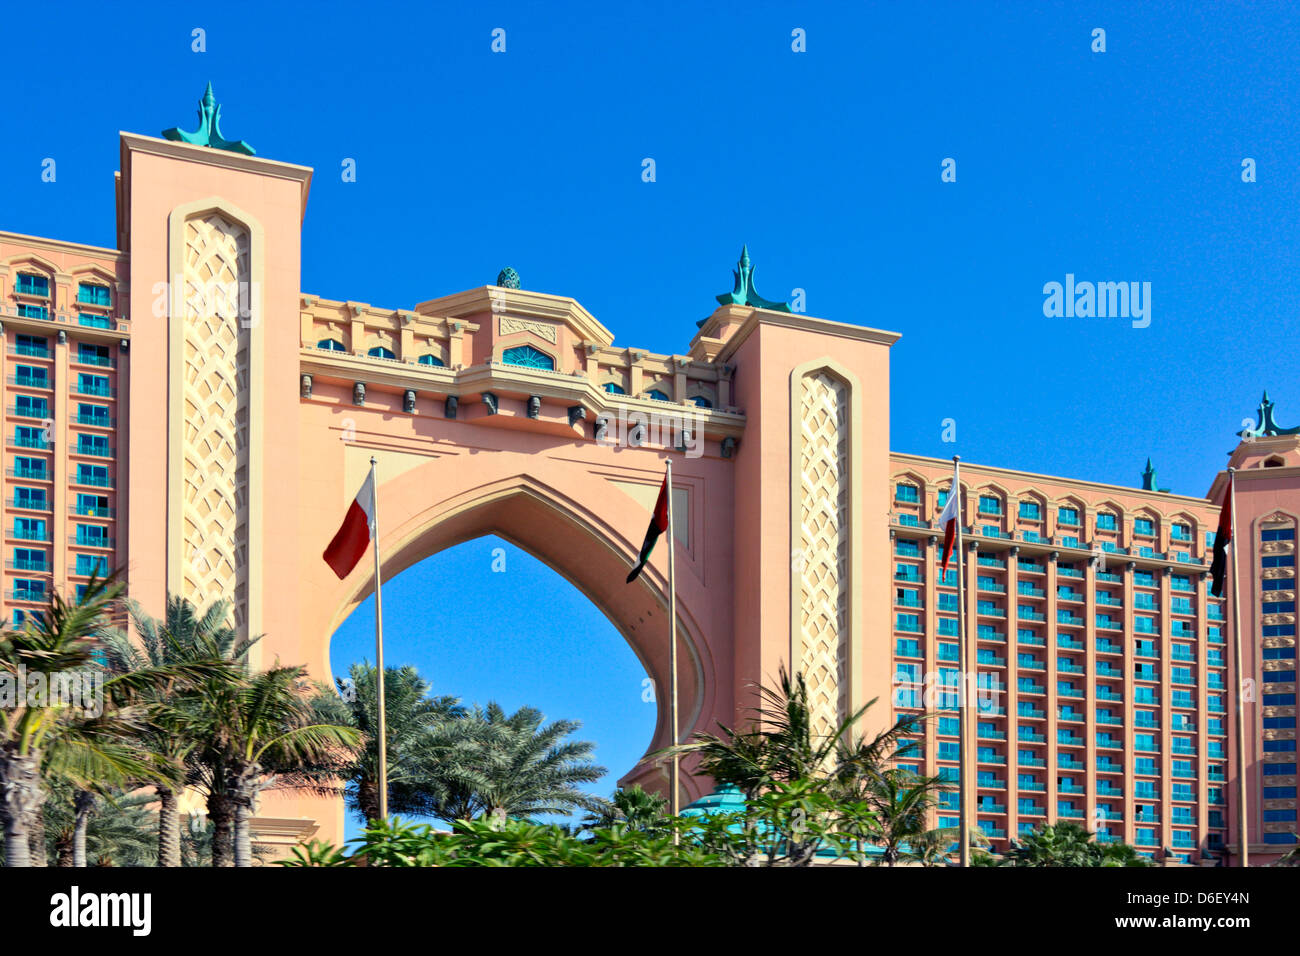 Hotel Atlantis The Palm, Dubai, United Arab Emirates Stock Photo